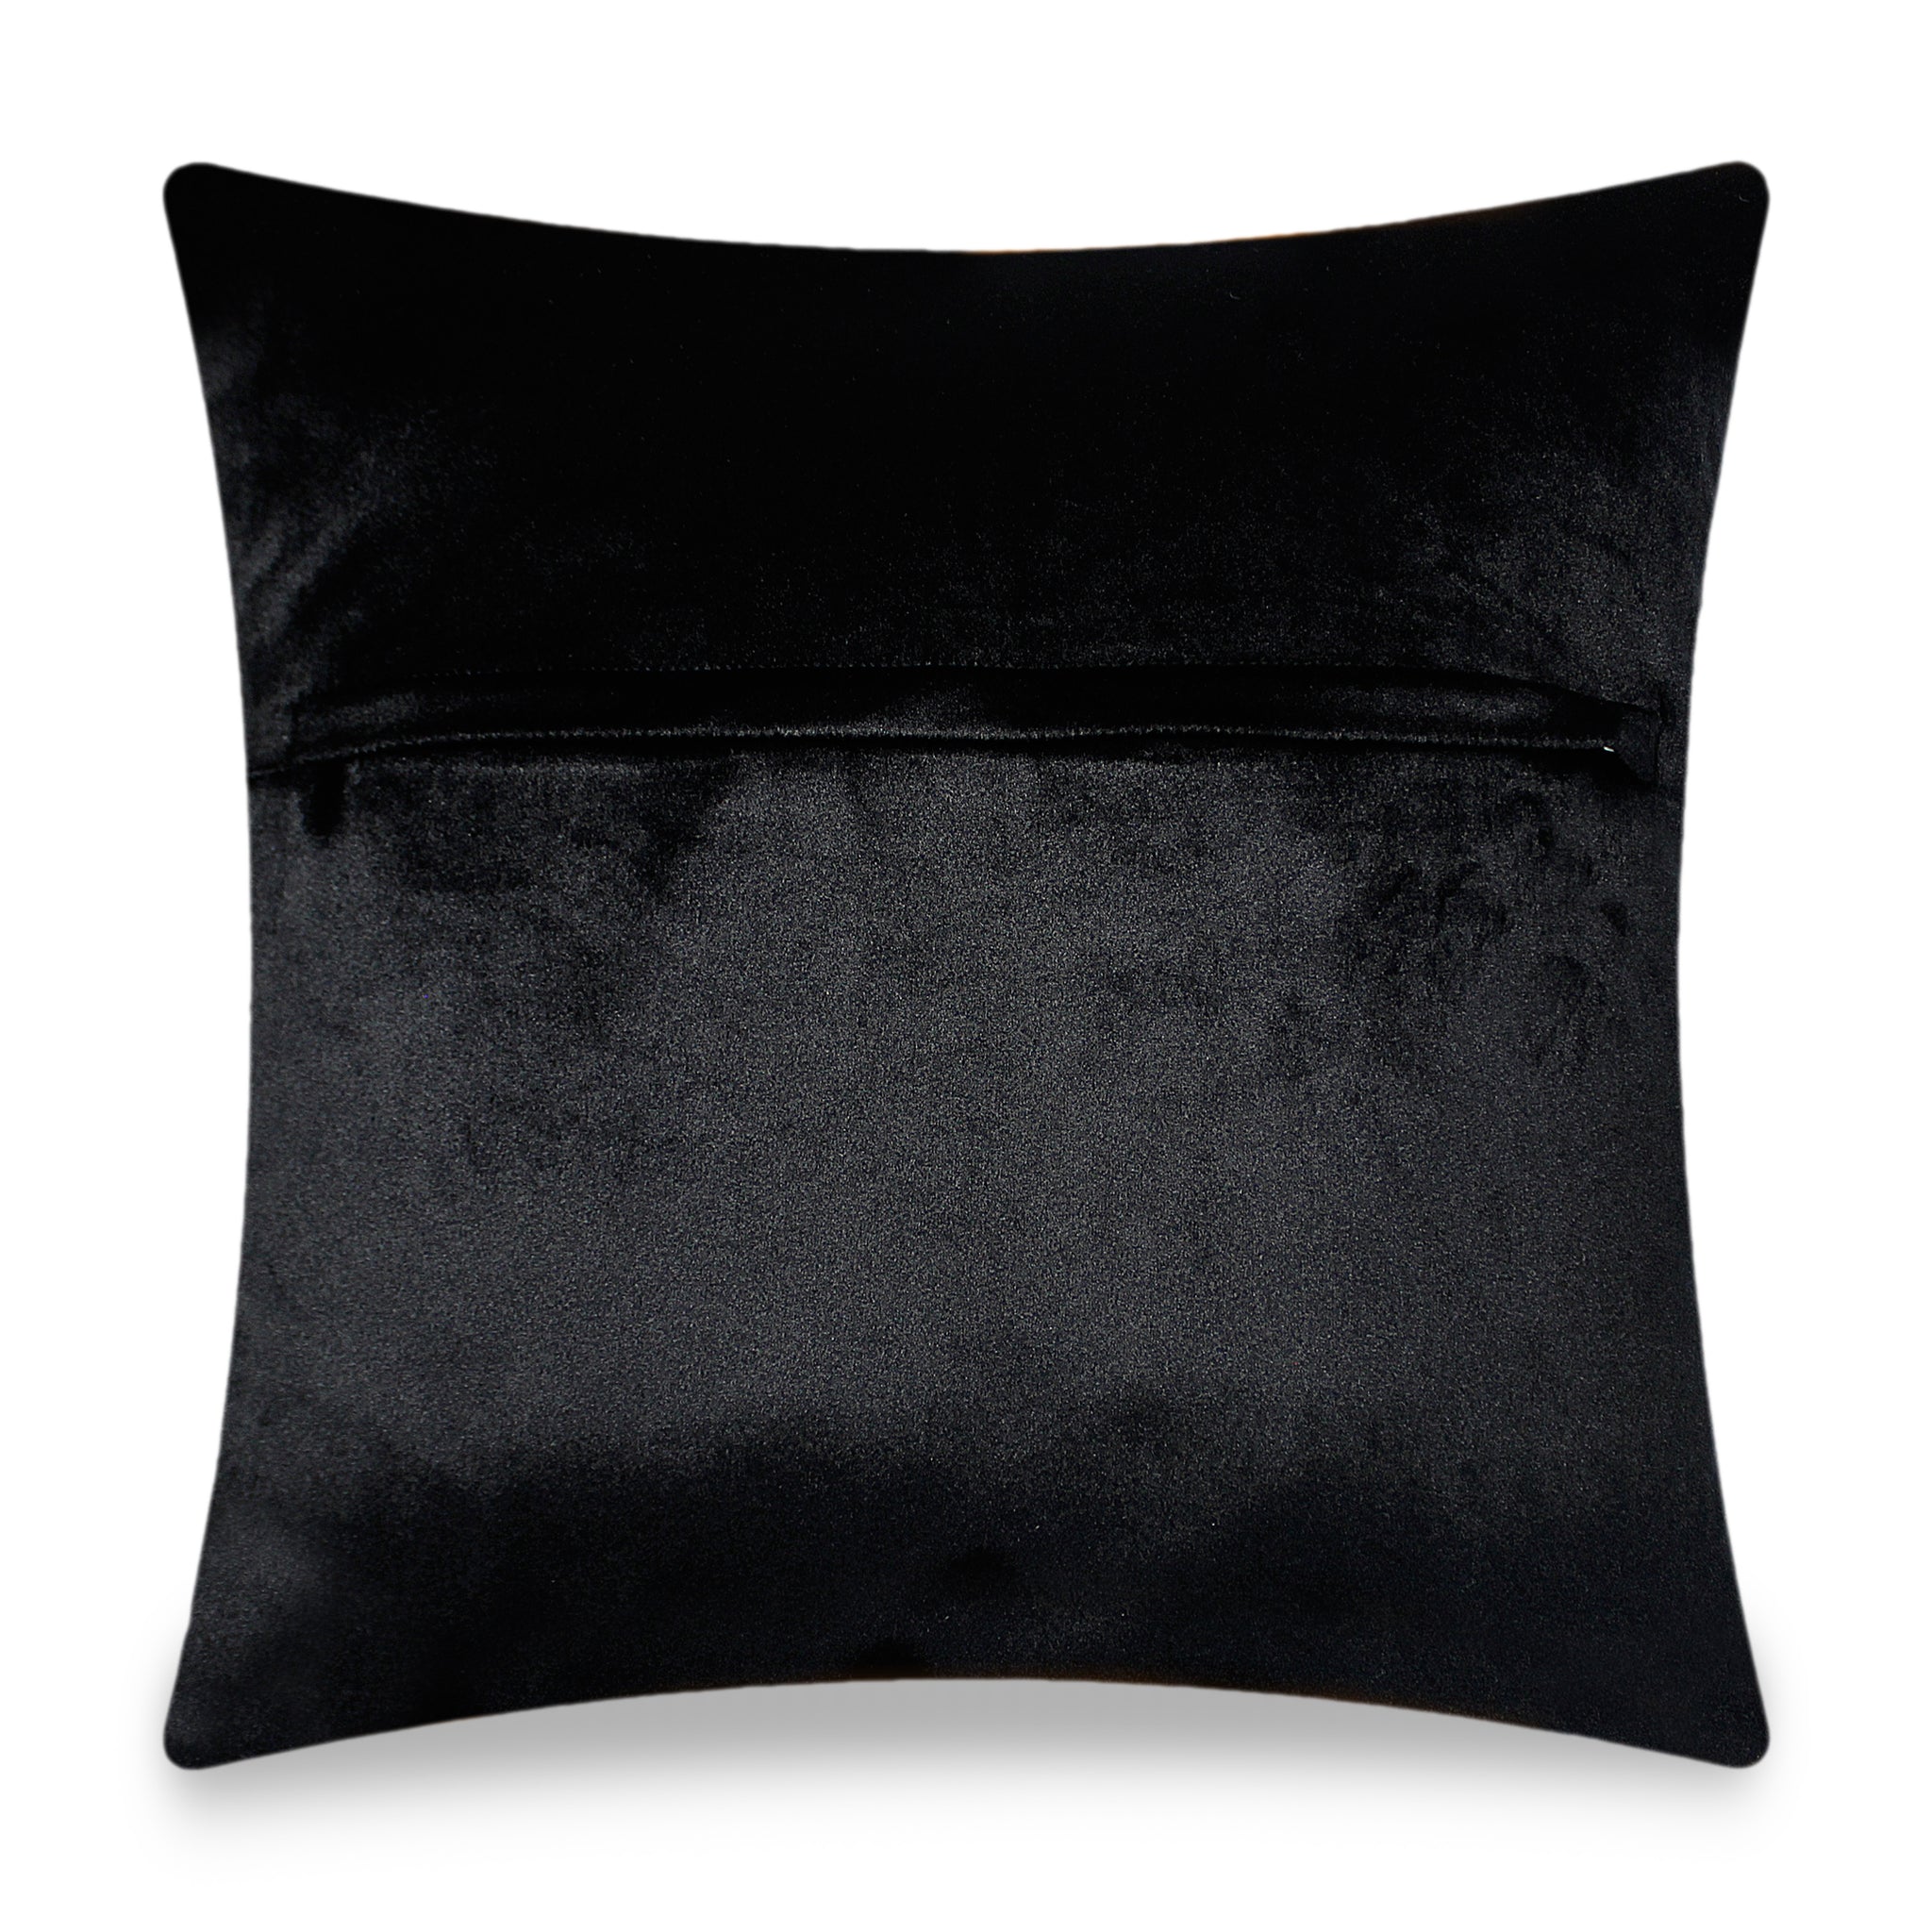  Velvet Cushion Cover Modern Geometric Embroidery Decorative Pillowcase Abstract Home Decor Throw Pillow for Sofa Chair Living Room 45x45 cm 